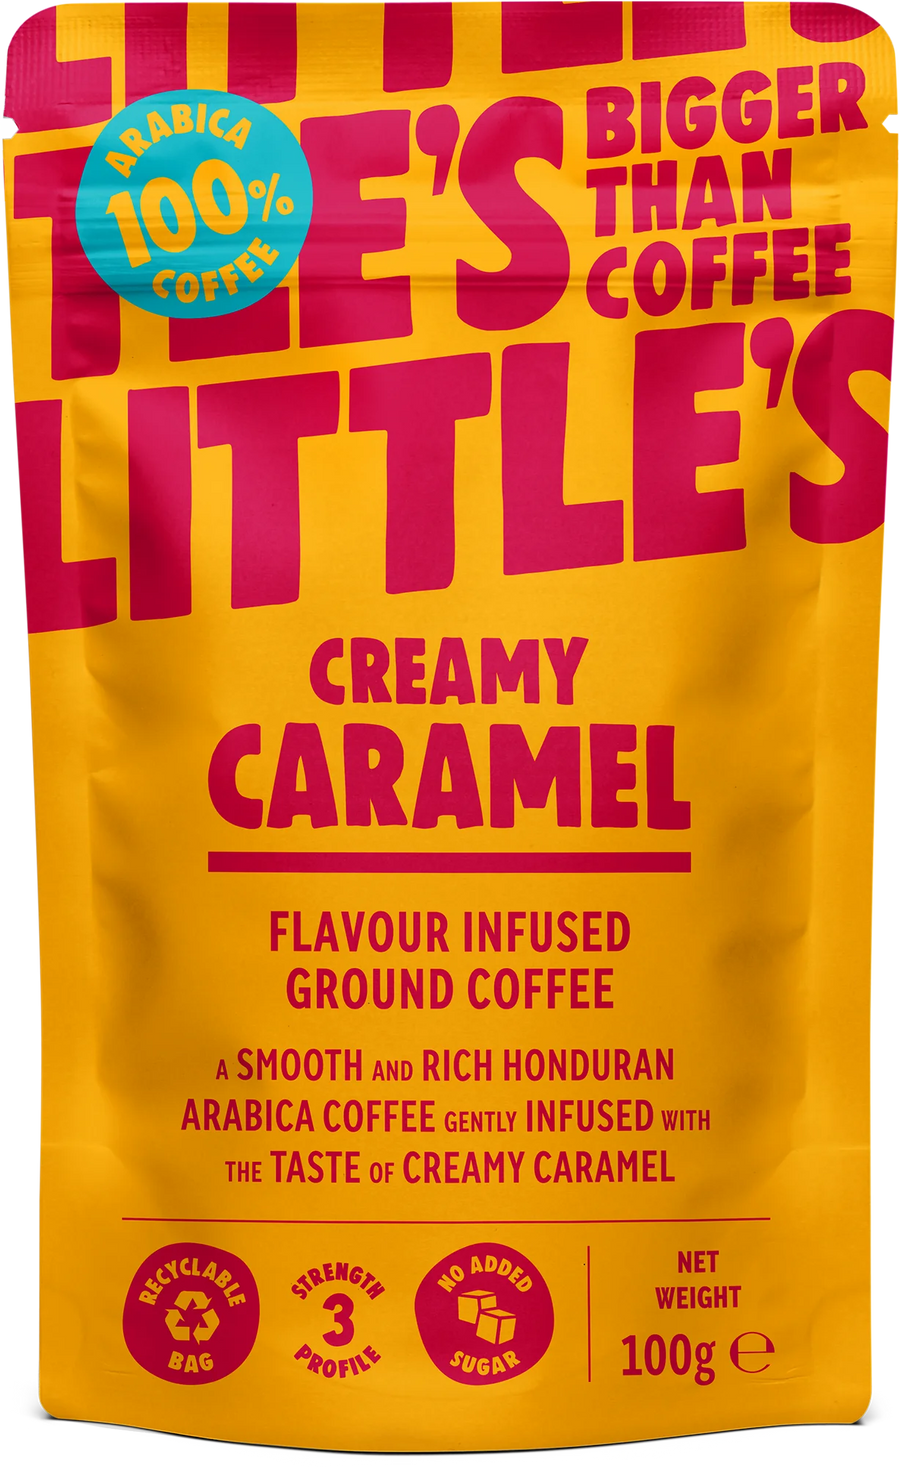 Little’s Creamy Caramel Flavoured Ground Coffee